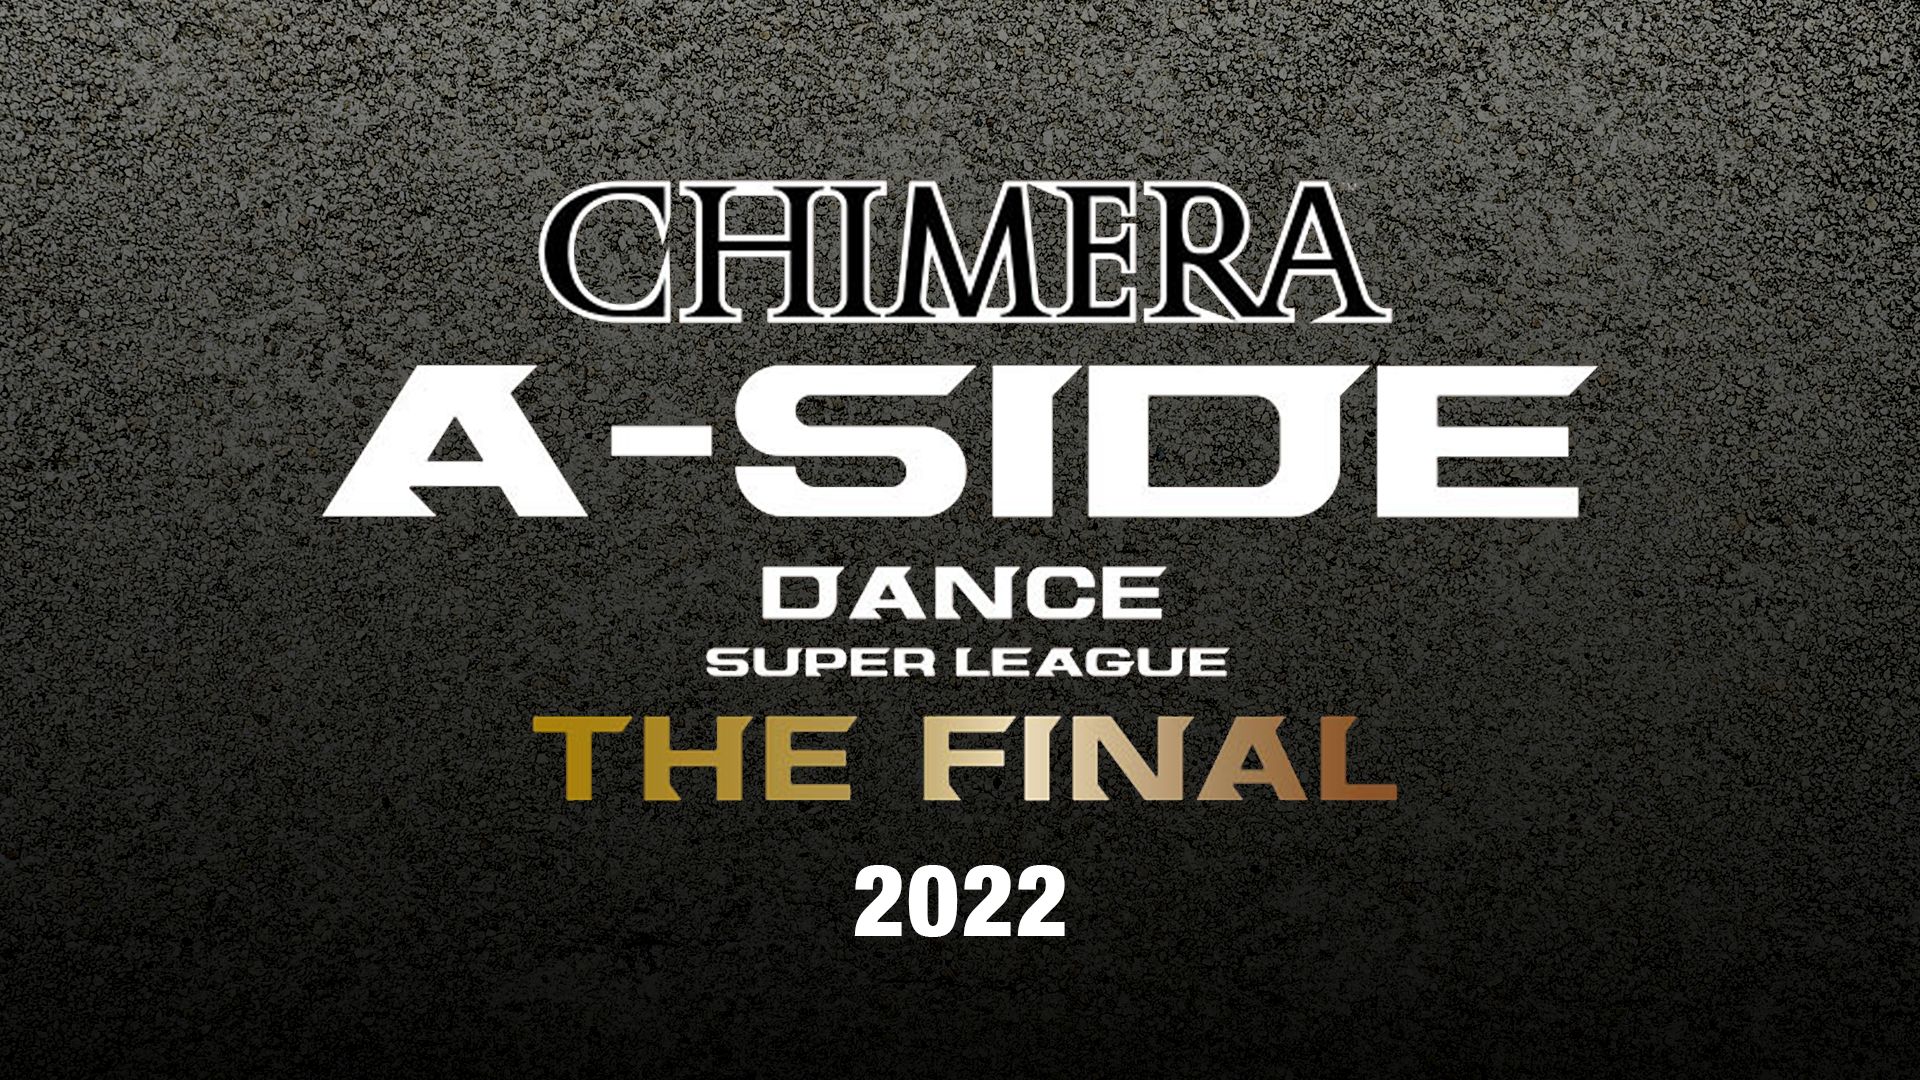 CHIMERA A-SIDE DANCE SUPER LEAGUE “THE FINAL" 2022